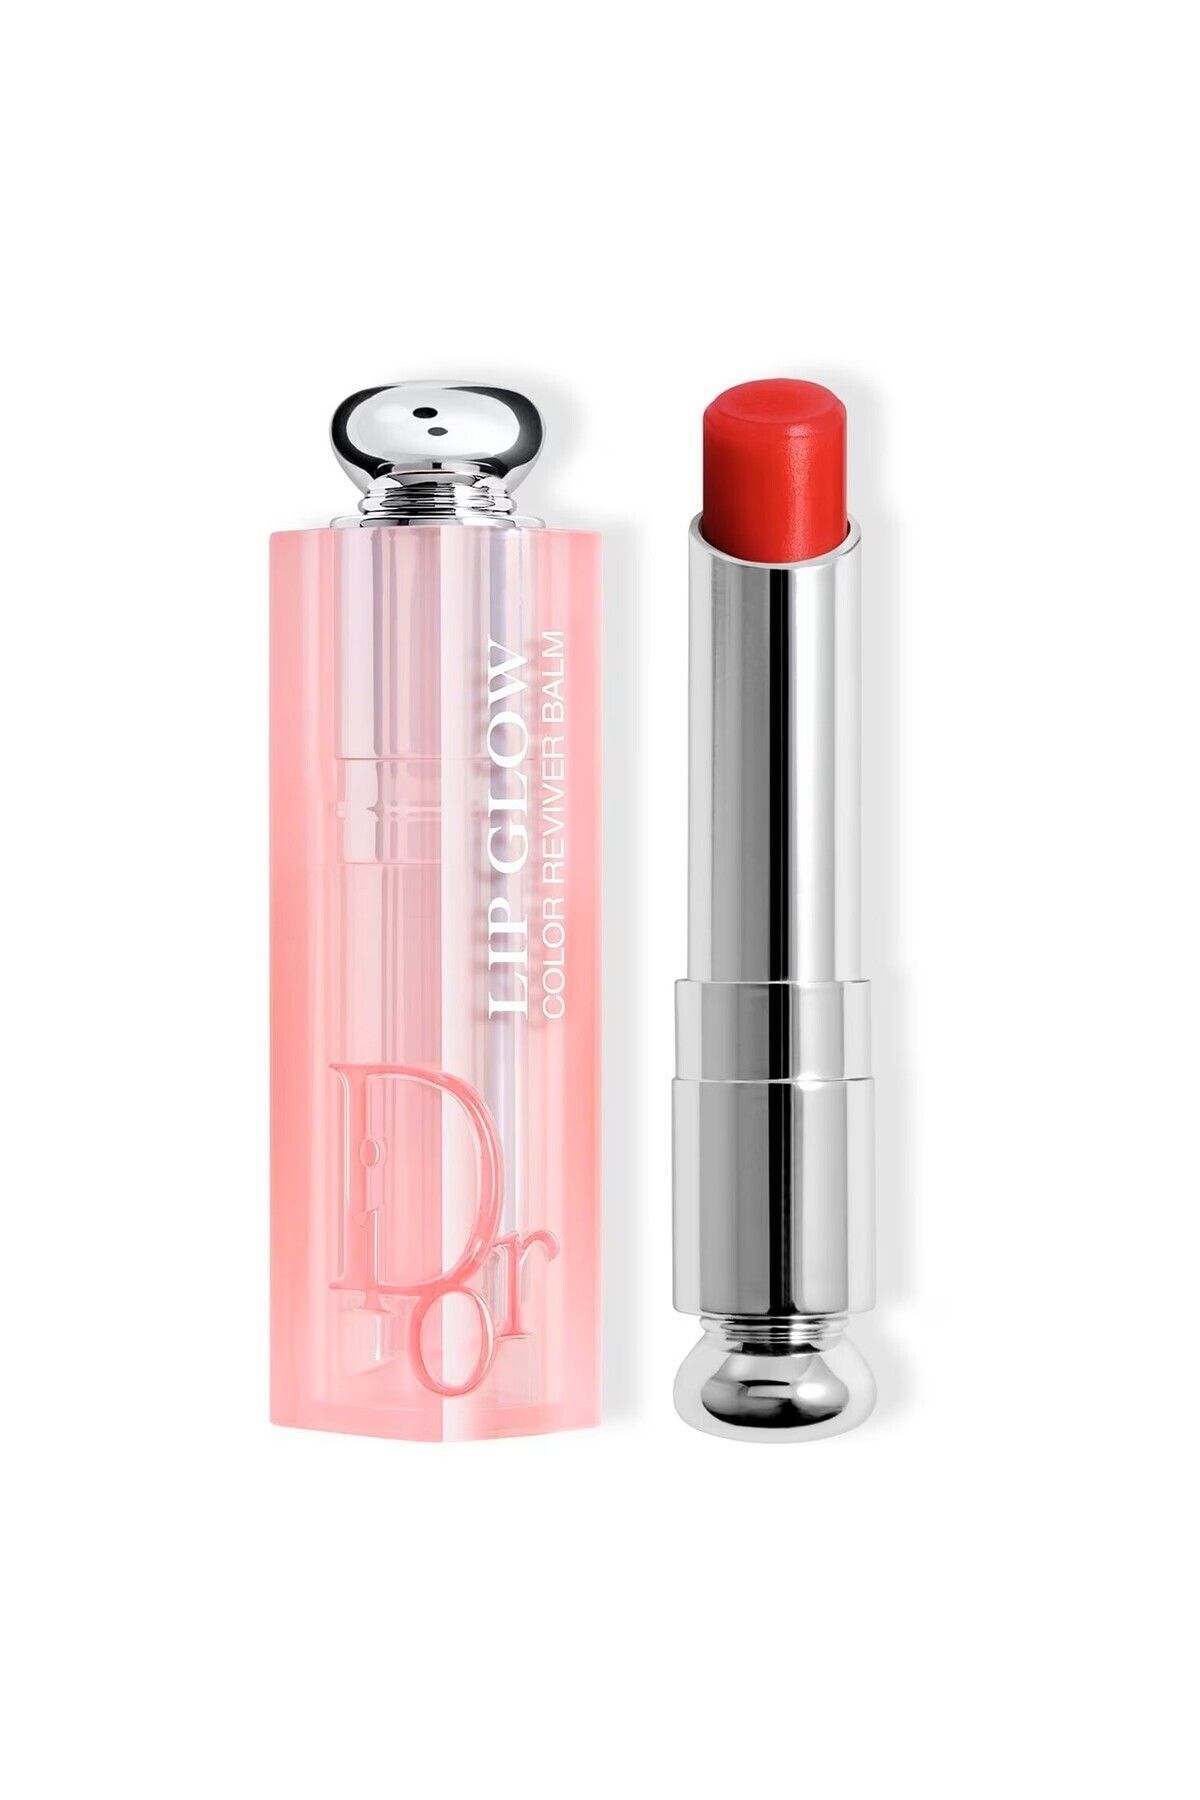 Dior 031 Strawberry Addict Lip Glow - 24 Hour Refreshing Shine Lip Gloss With Cherry Oil